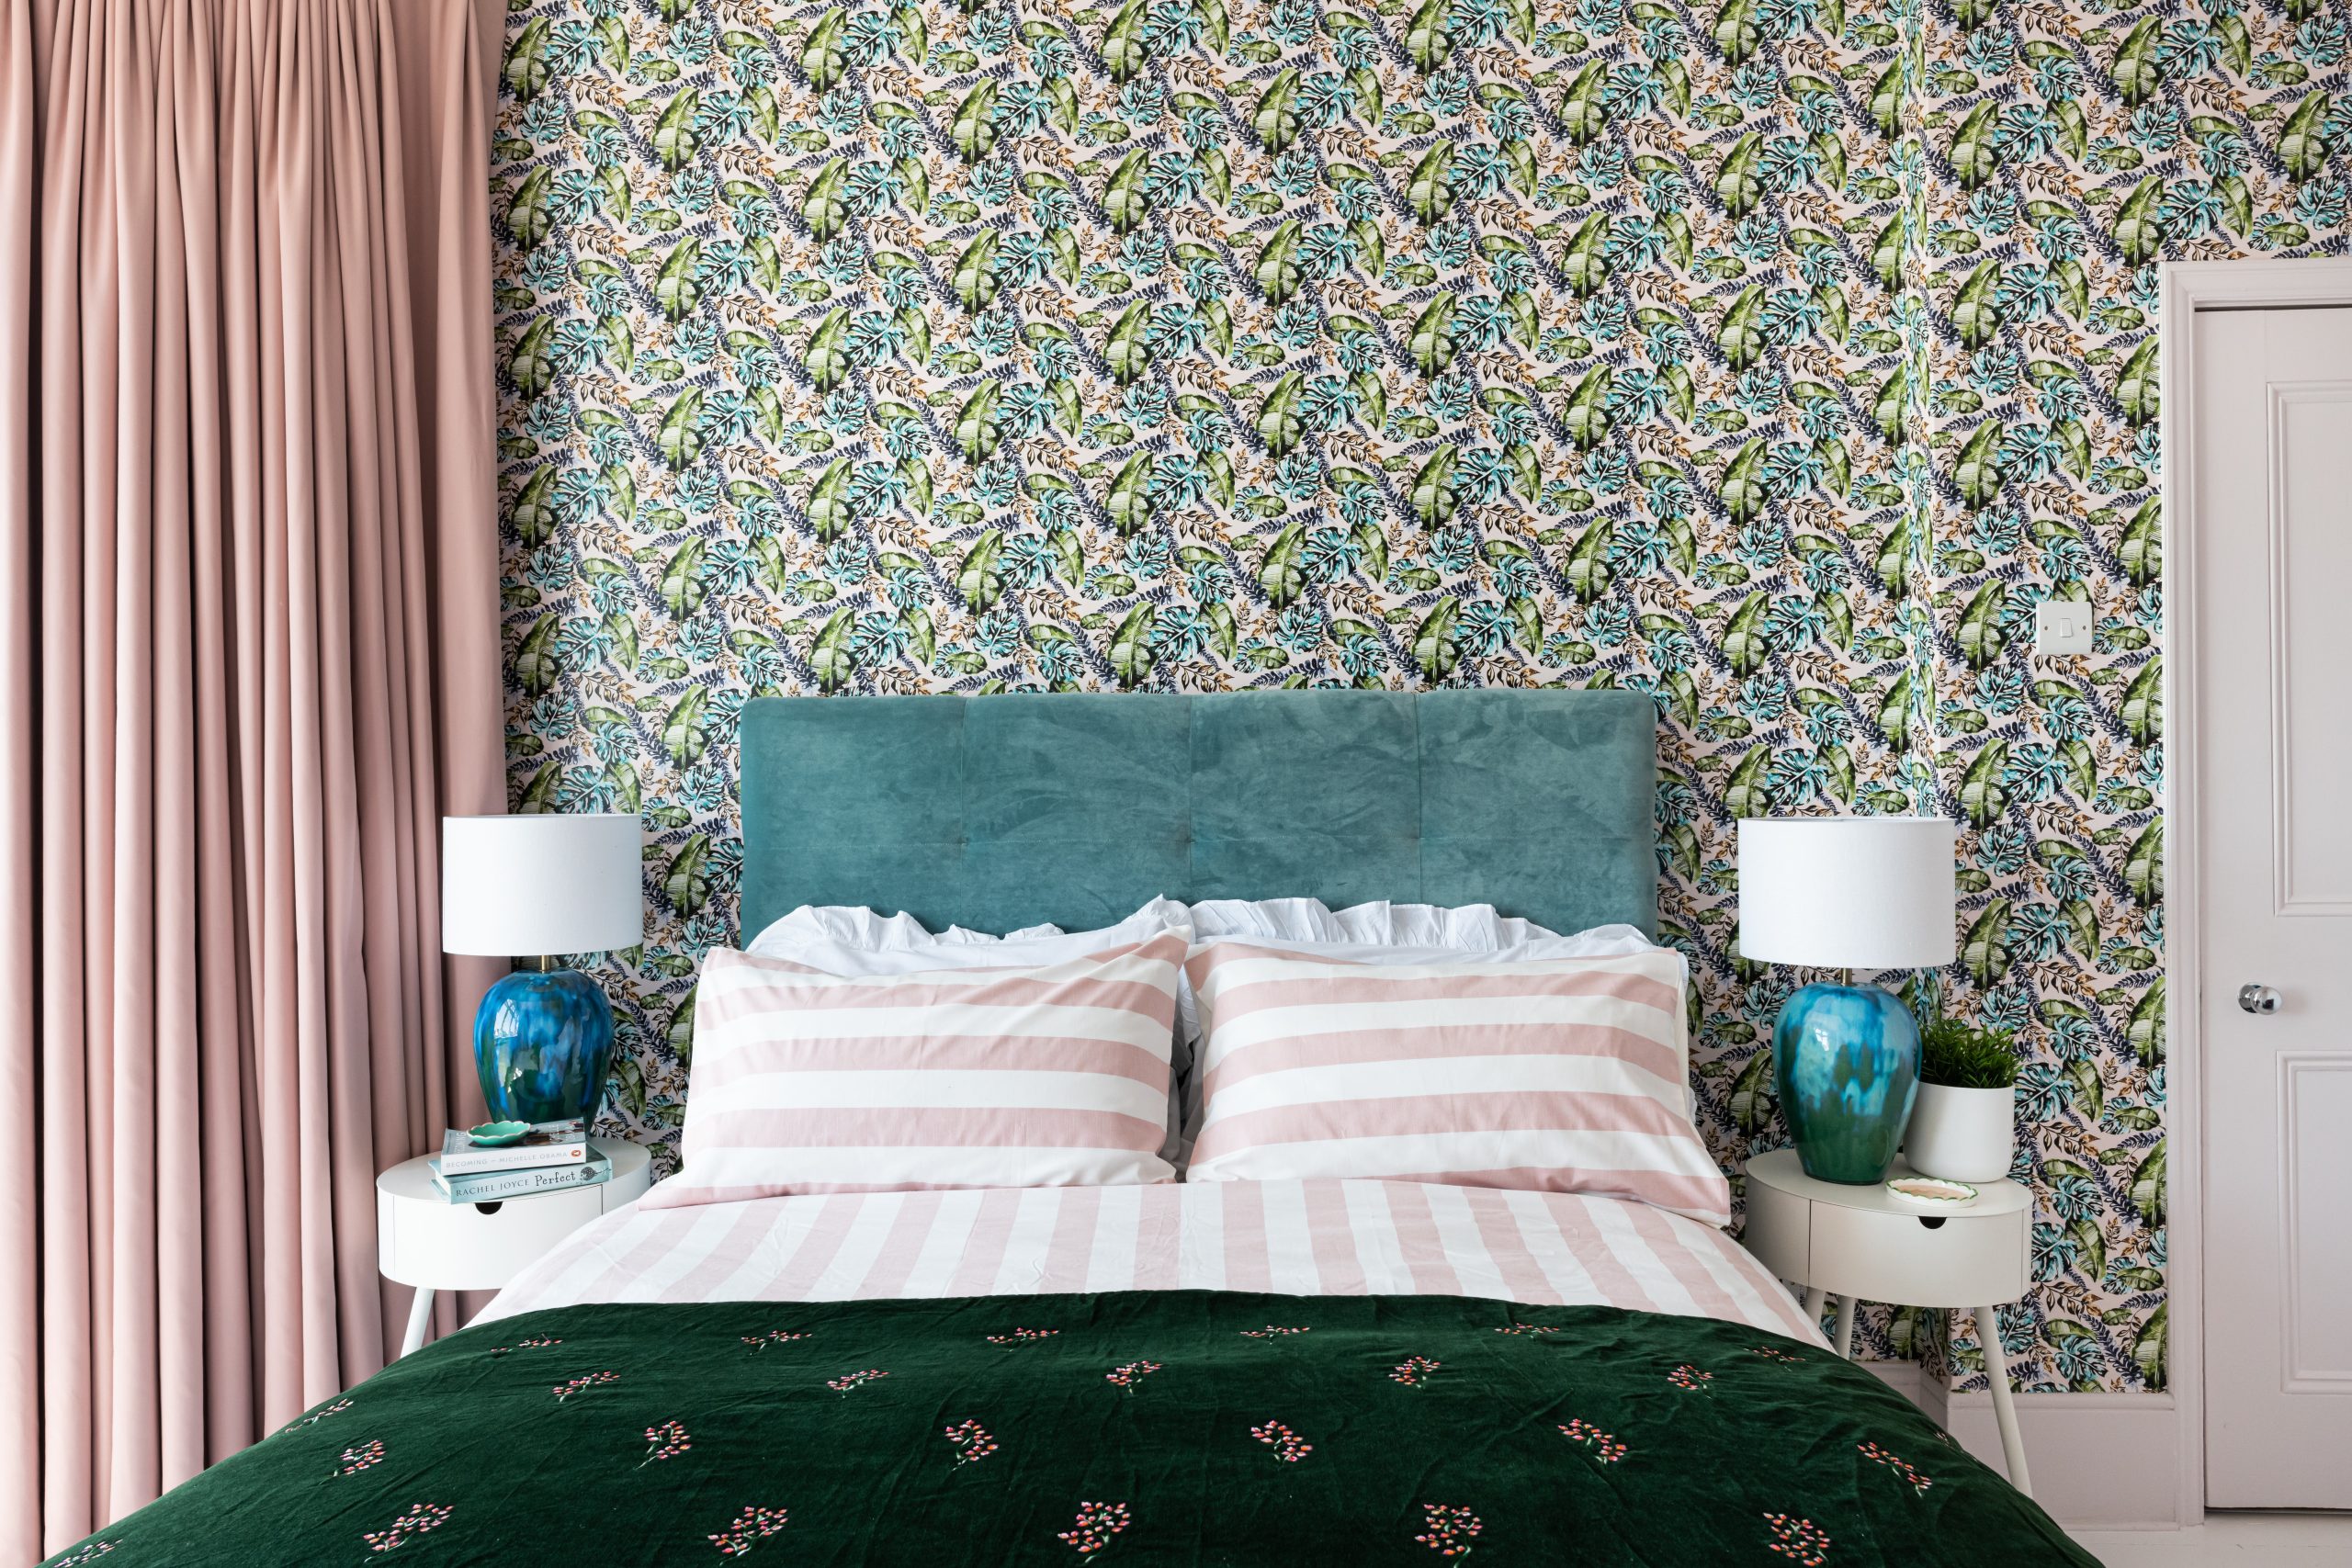 Guest bedroom by London interior designer Emma Green